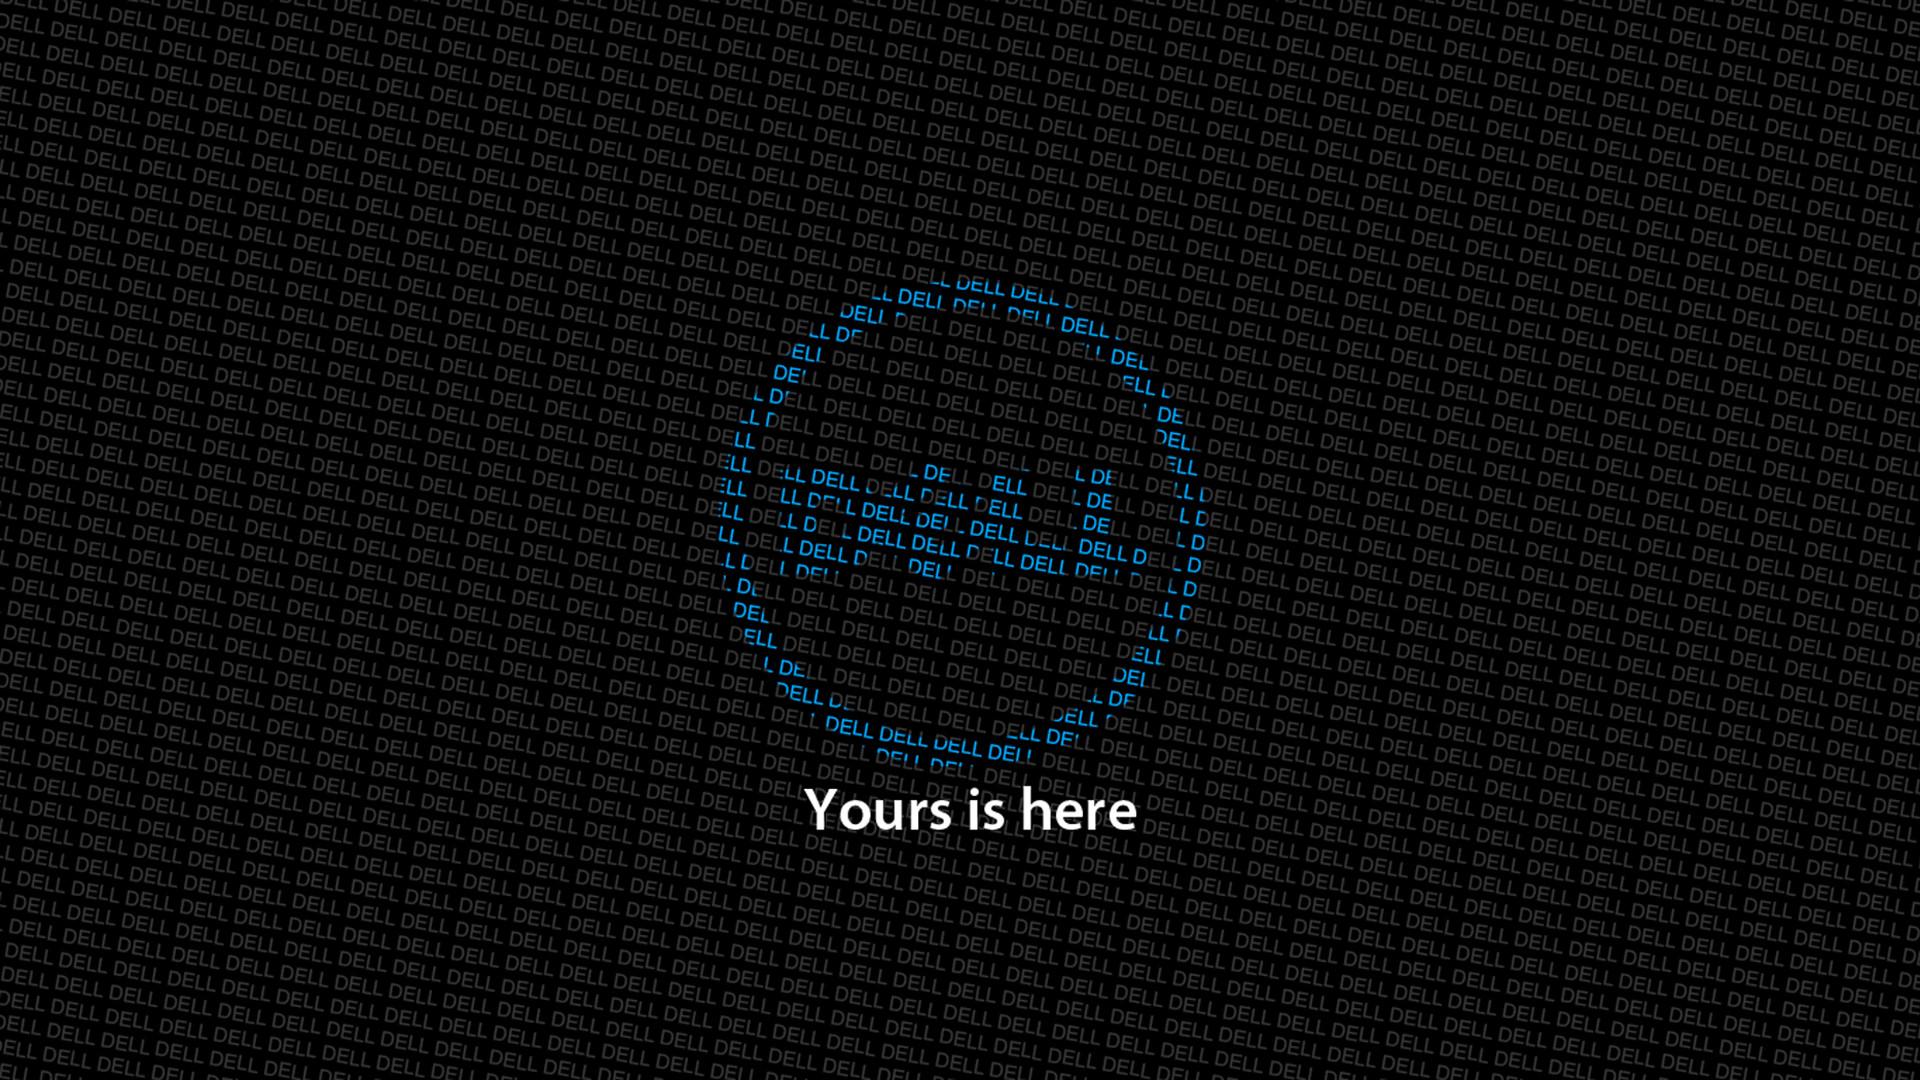 HD Dell Background & Dell Wallpaper Image For Windows